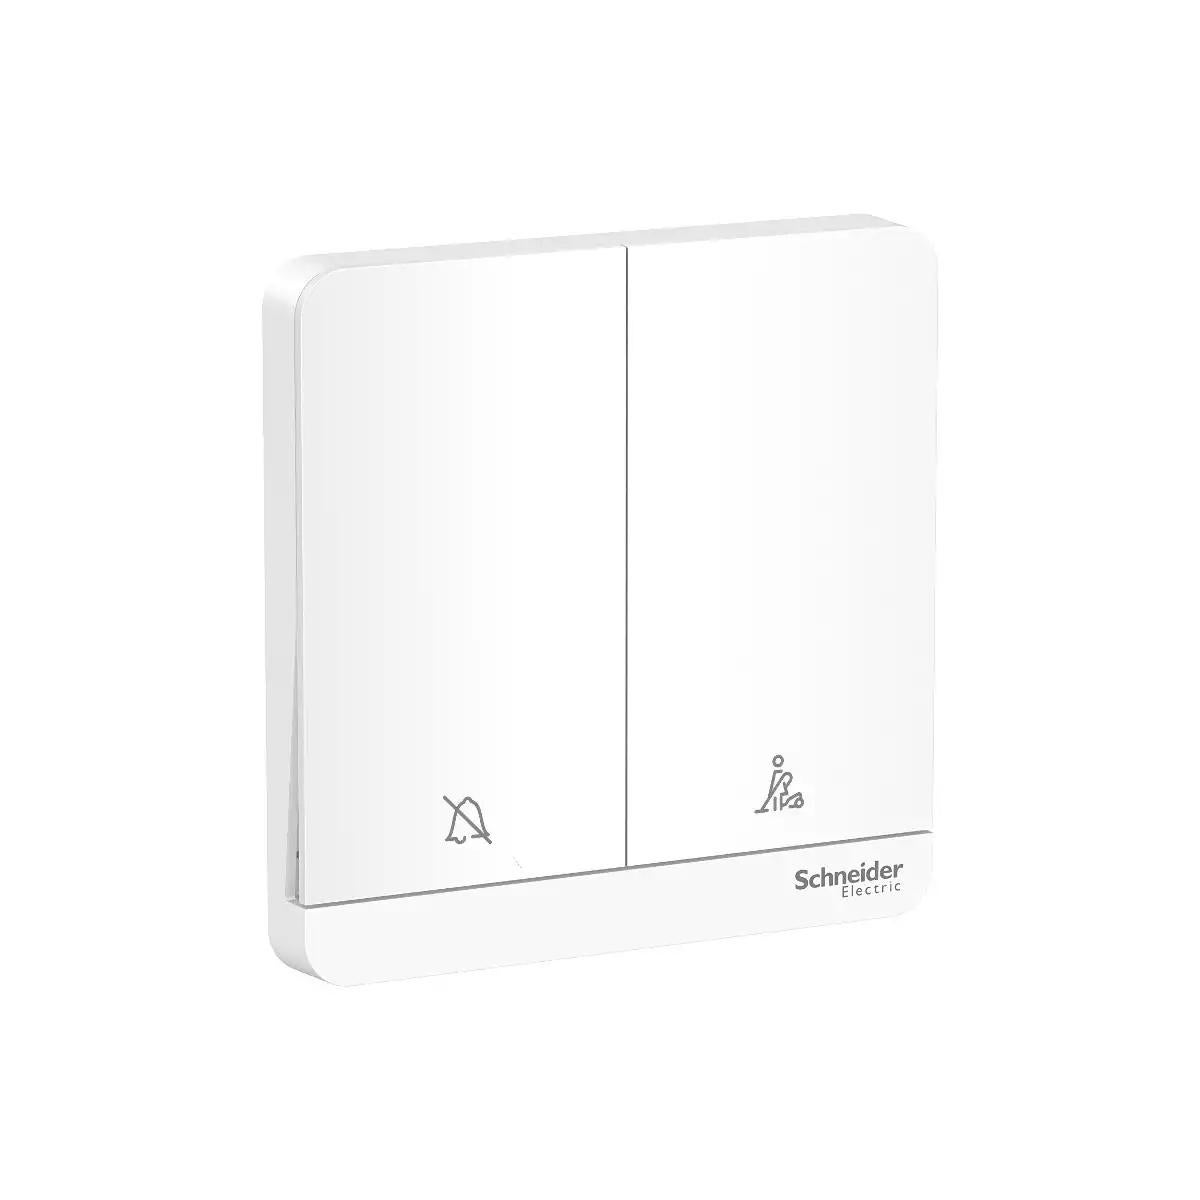 AvatarOn, 2 switches, 16AX, 250V, 1 way, LED, White